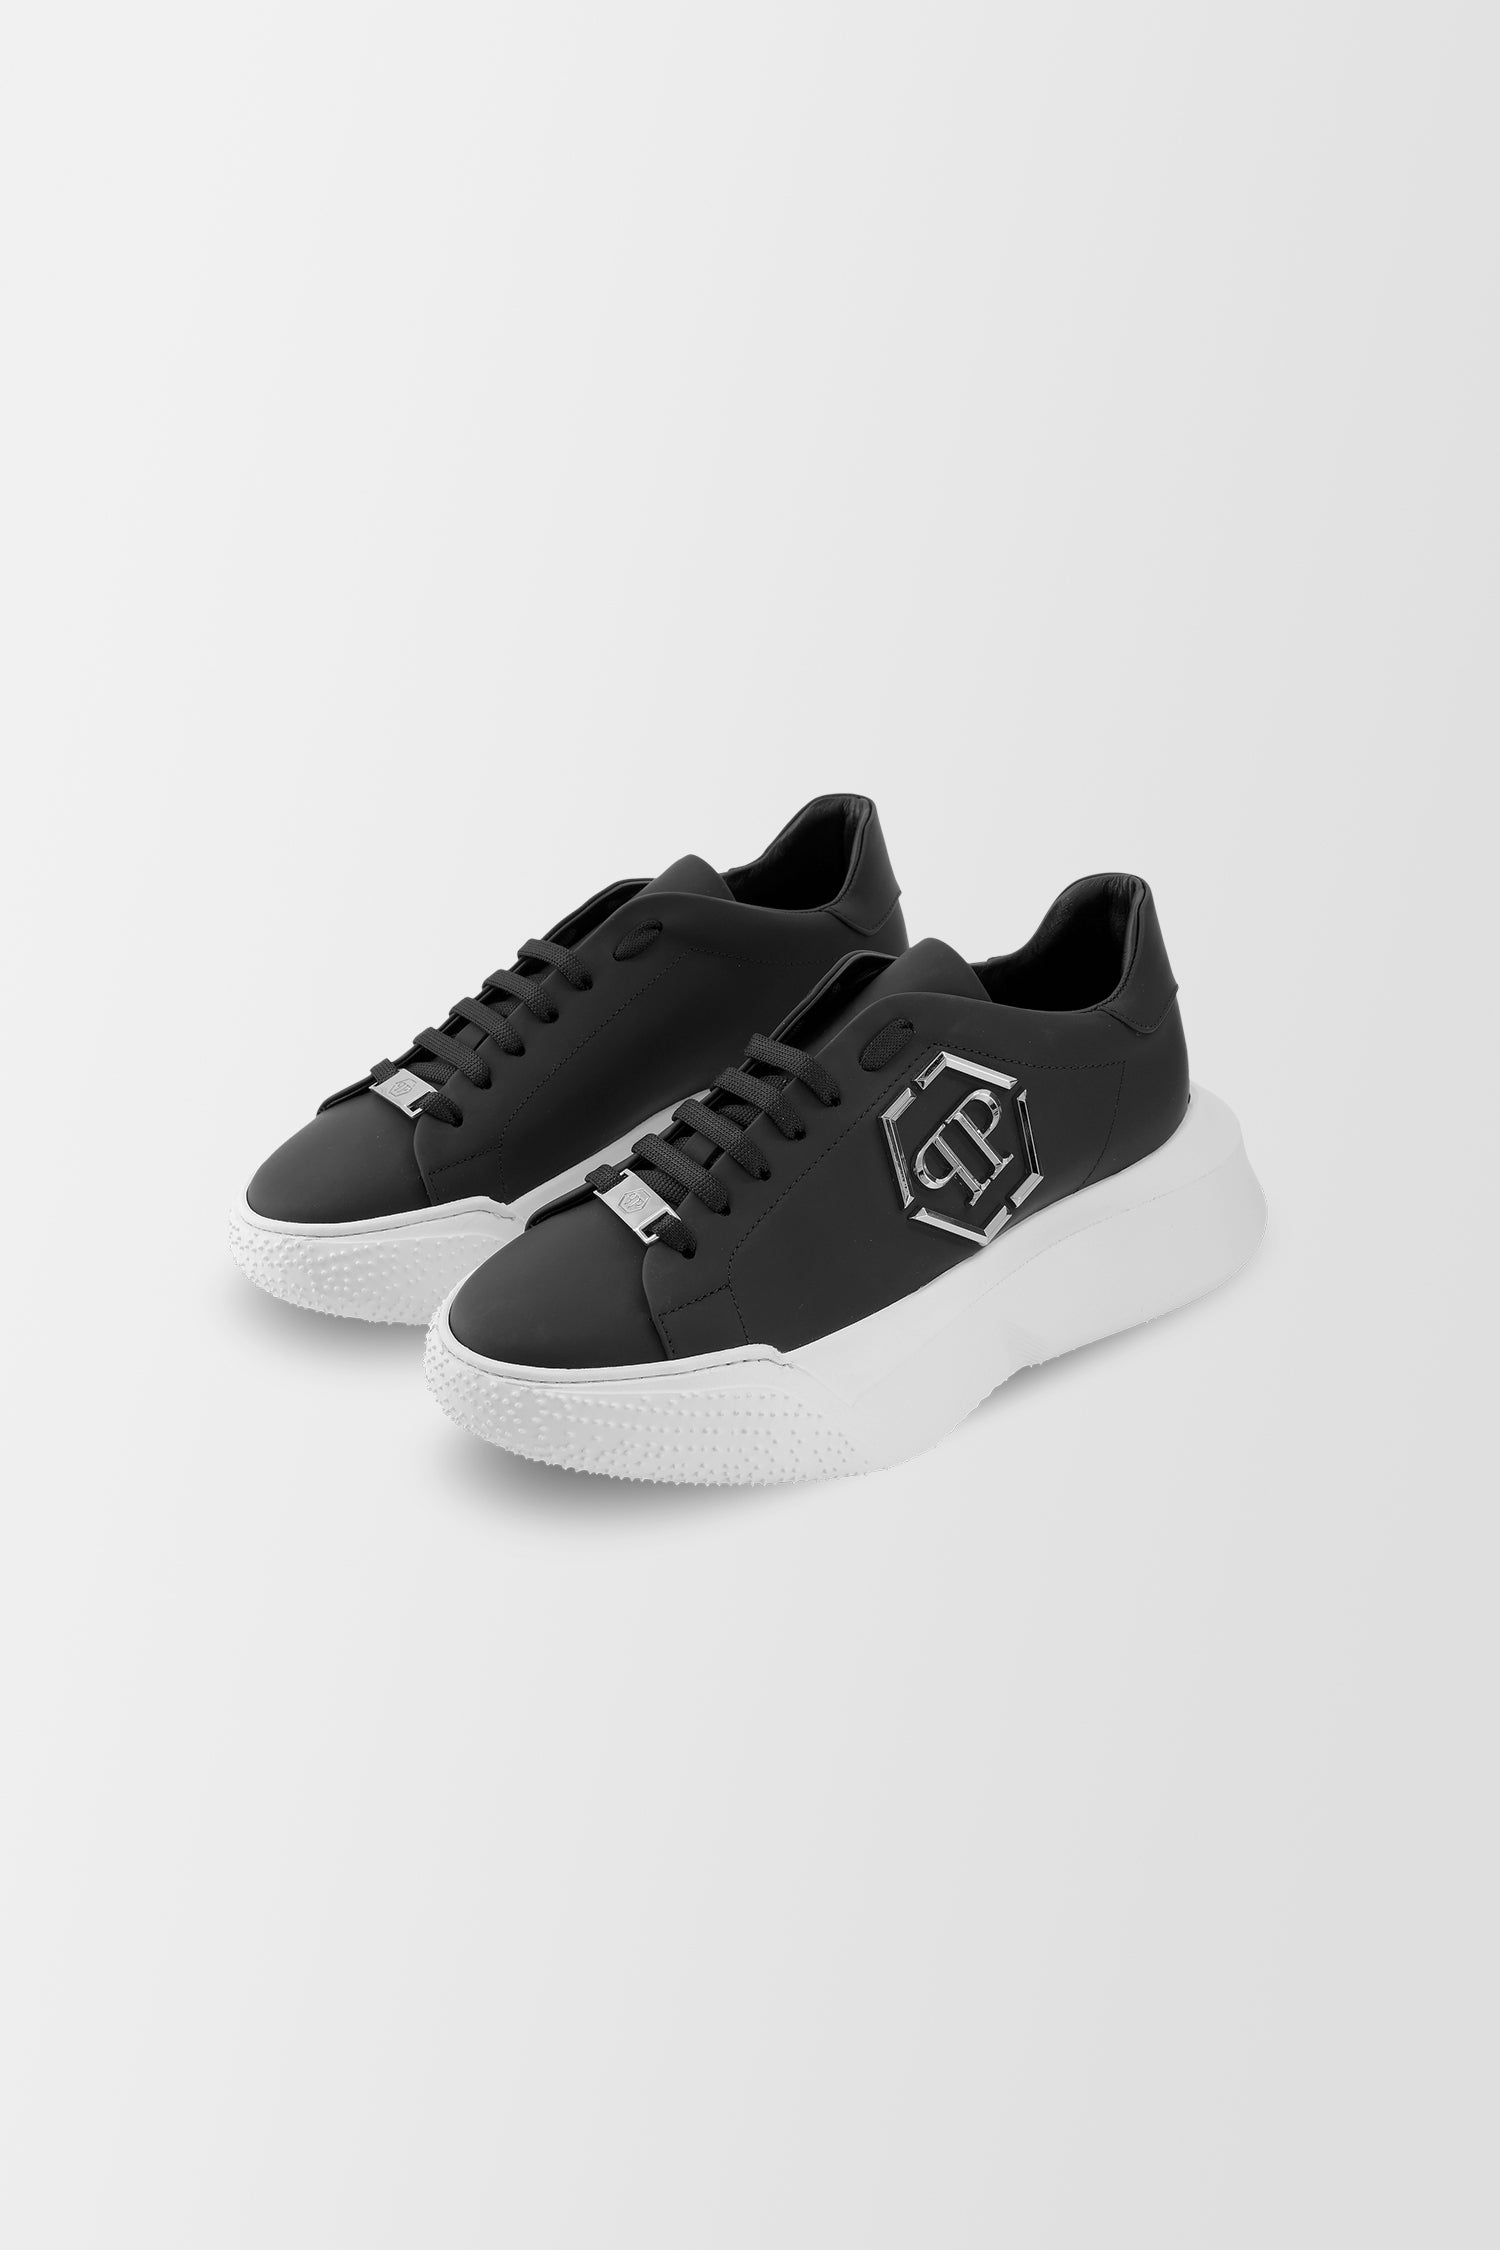 Philipp Plein GOD$ILLA Black Sneakers